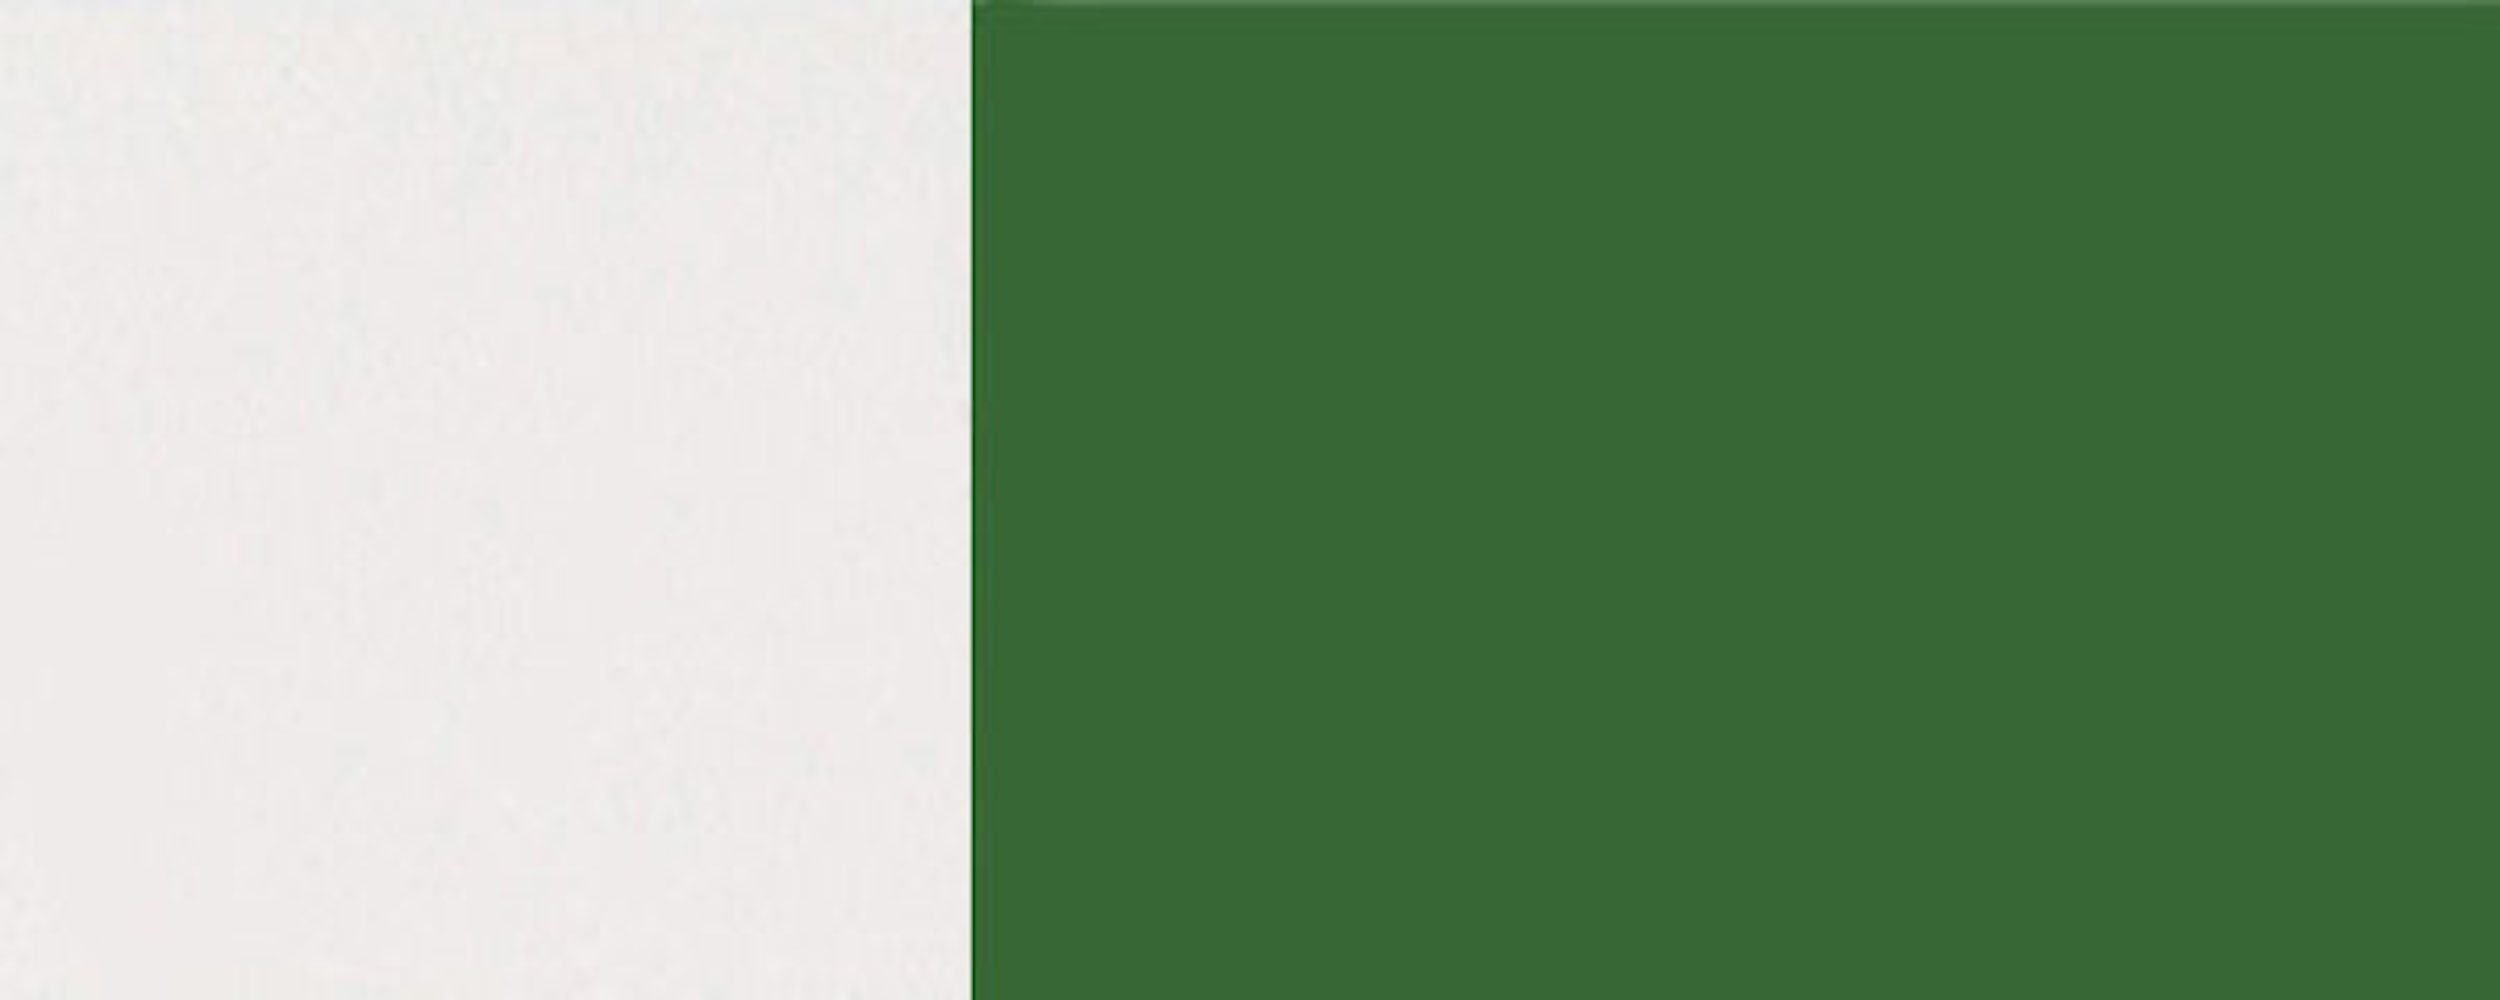 Hochglanz Front-, smaragdgrün 6001 Ausführung Feldmann-Wohnen RAL Korpusfarbe 1-türig Florence und (Florence) Klapphängeschrank 45cm grifflos wählbar